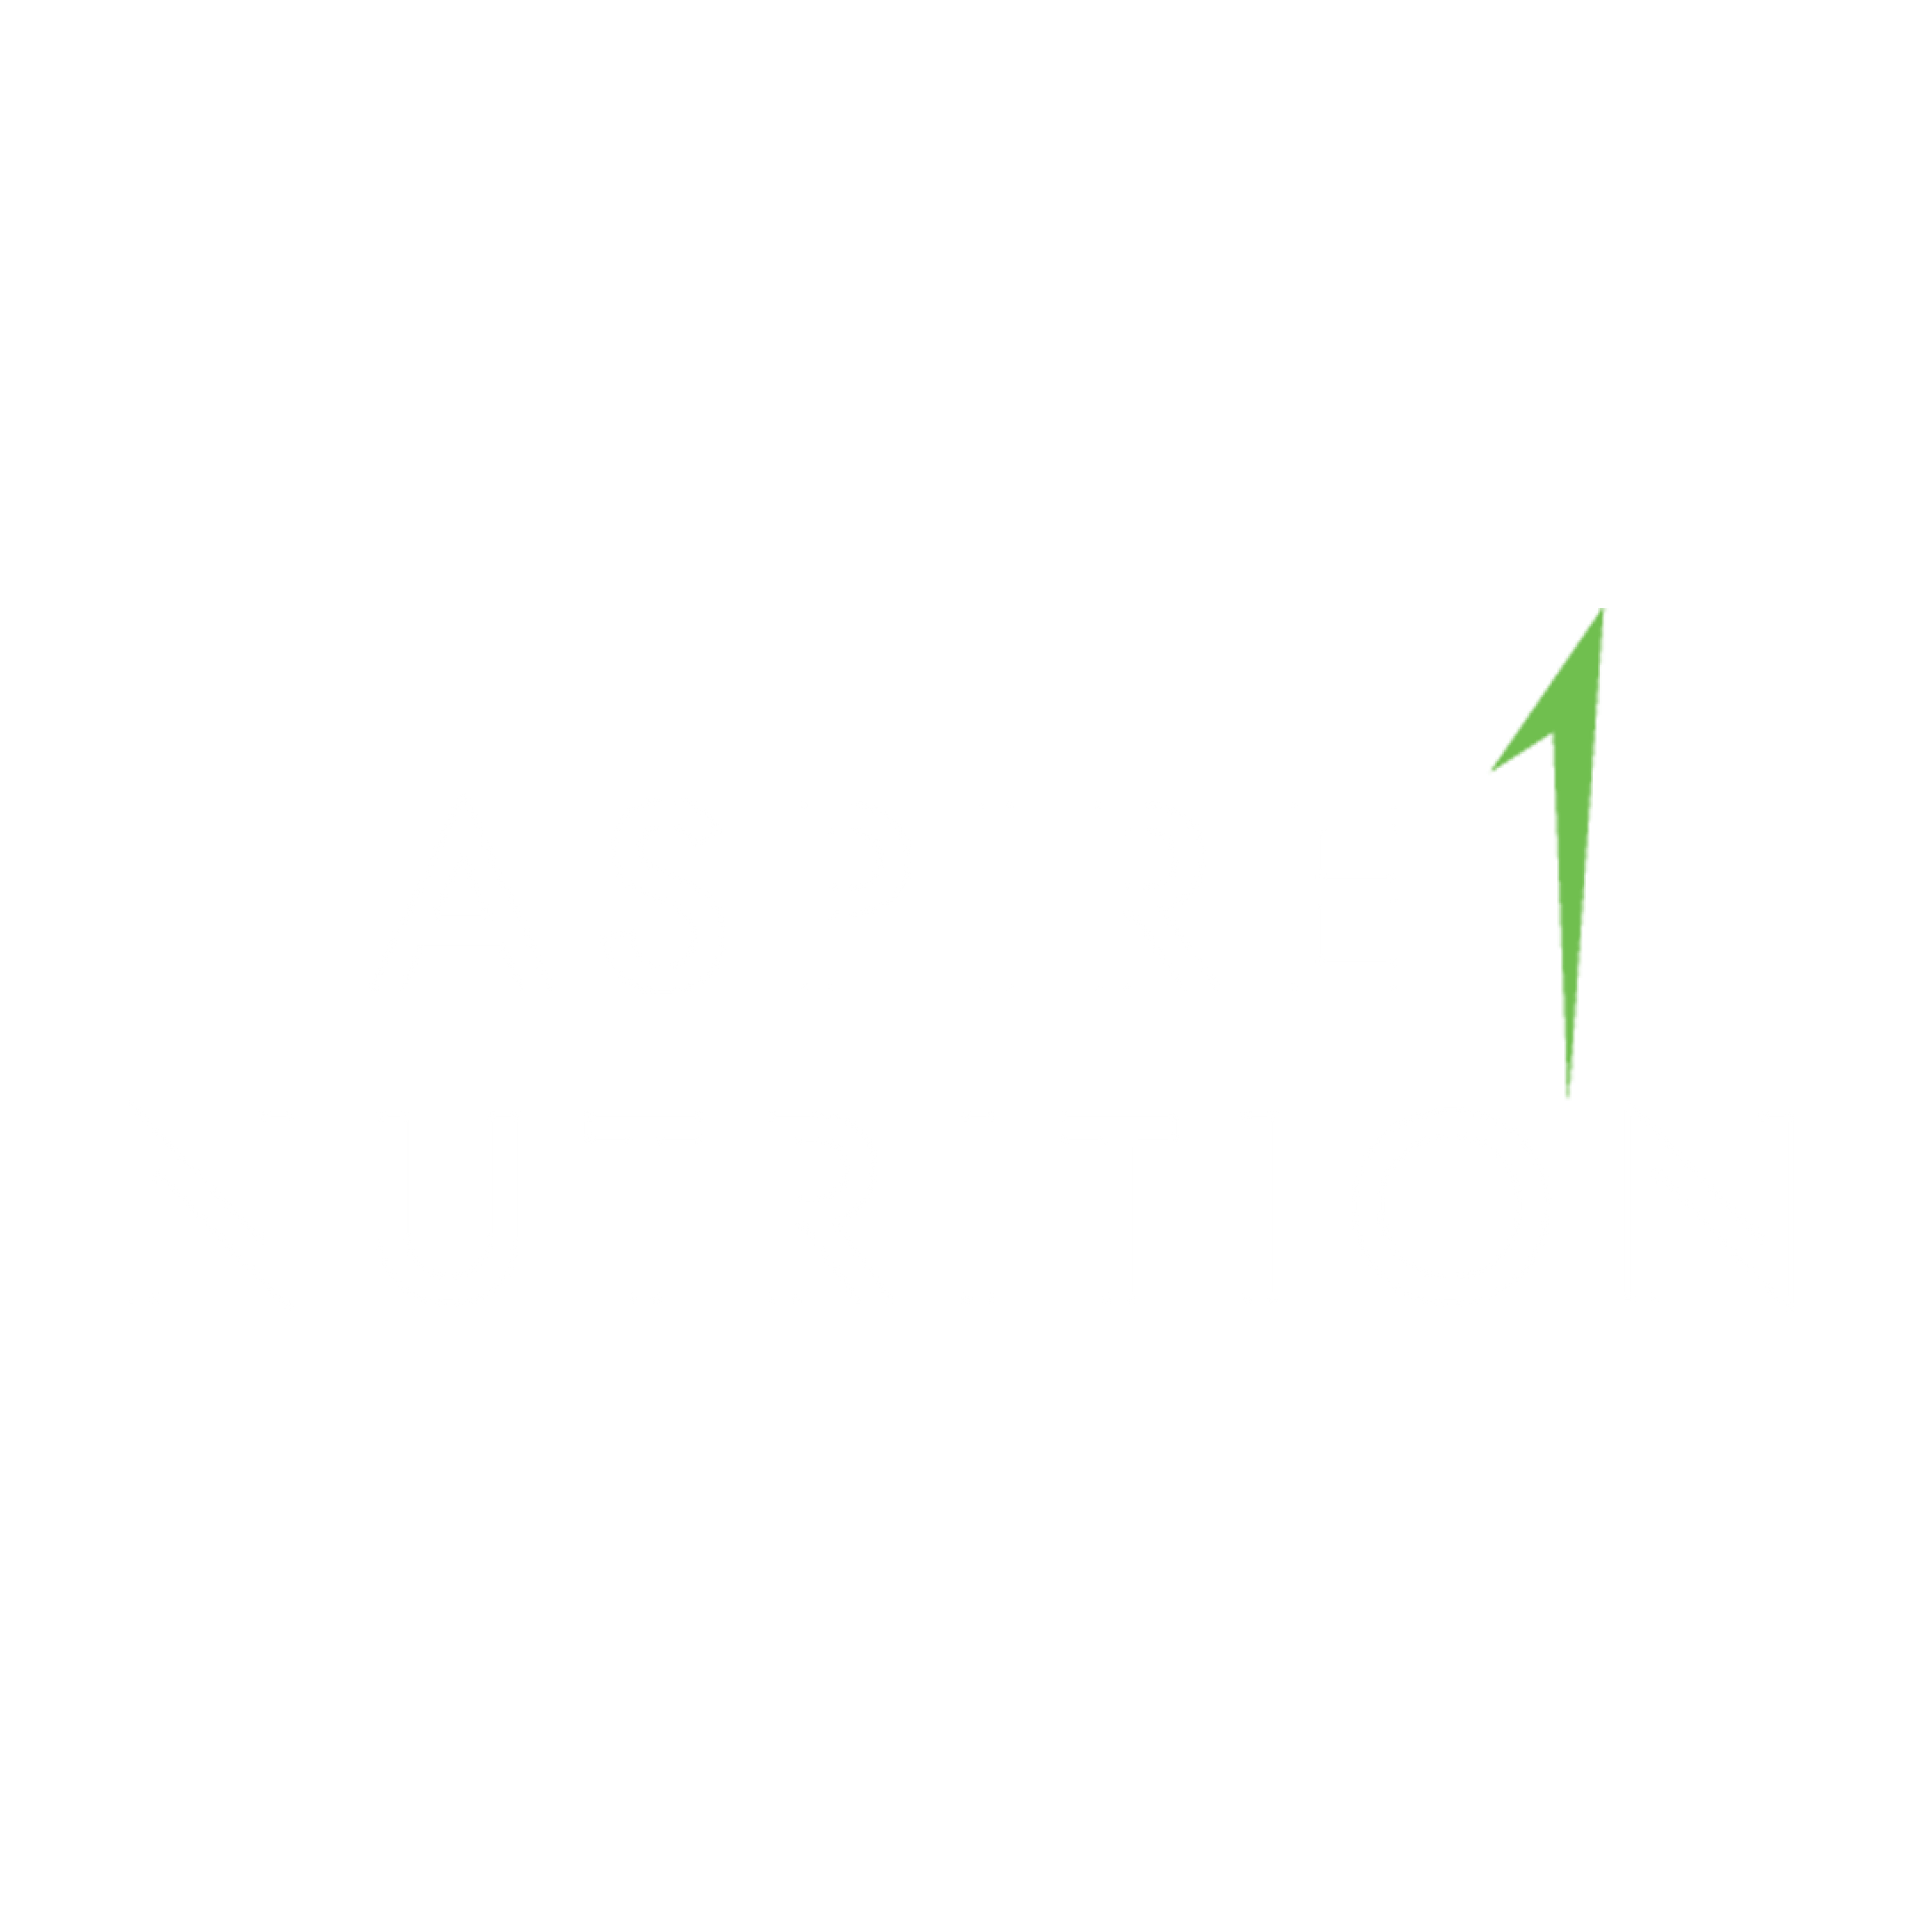 Aspire1 Nutrition logo